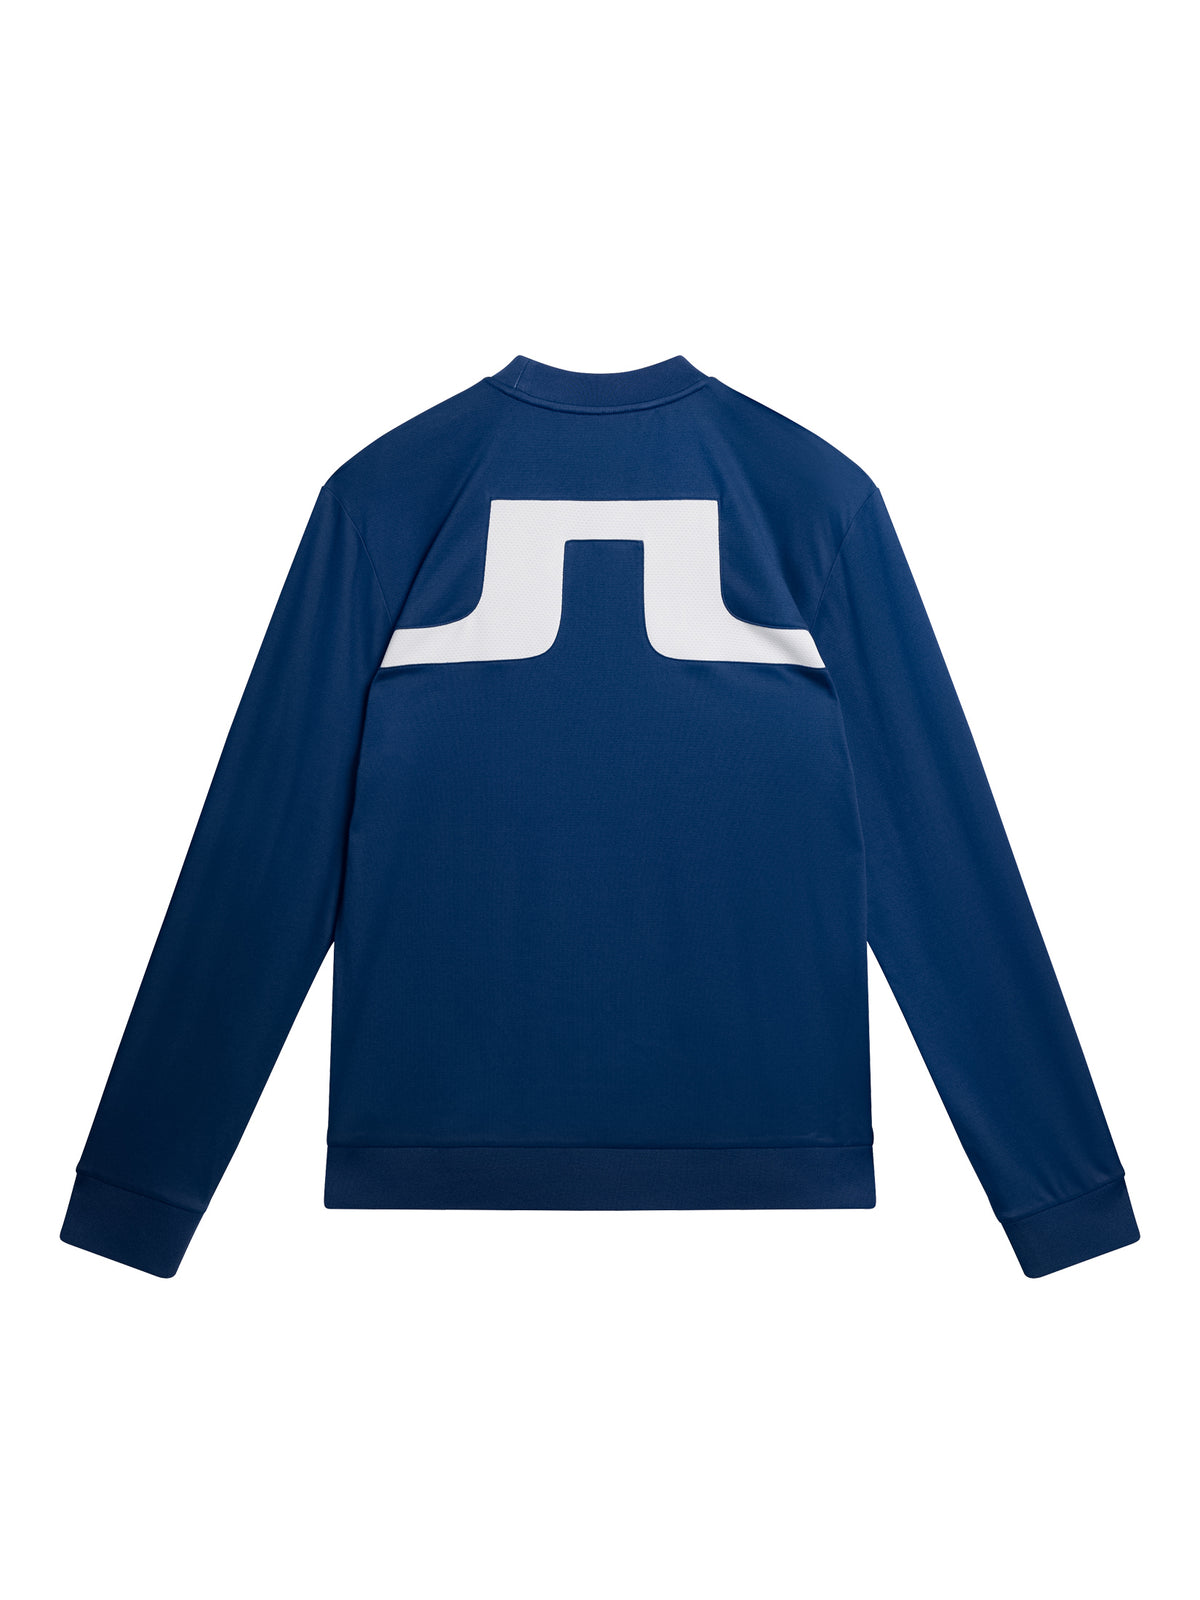 Jones Jersey Sweater / Estate Blue